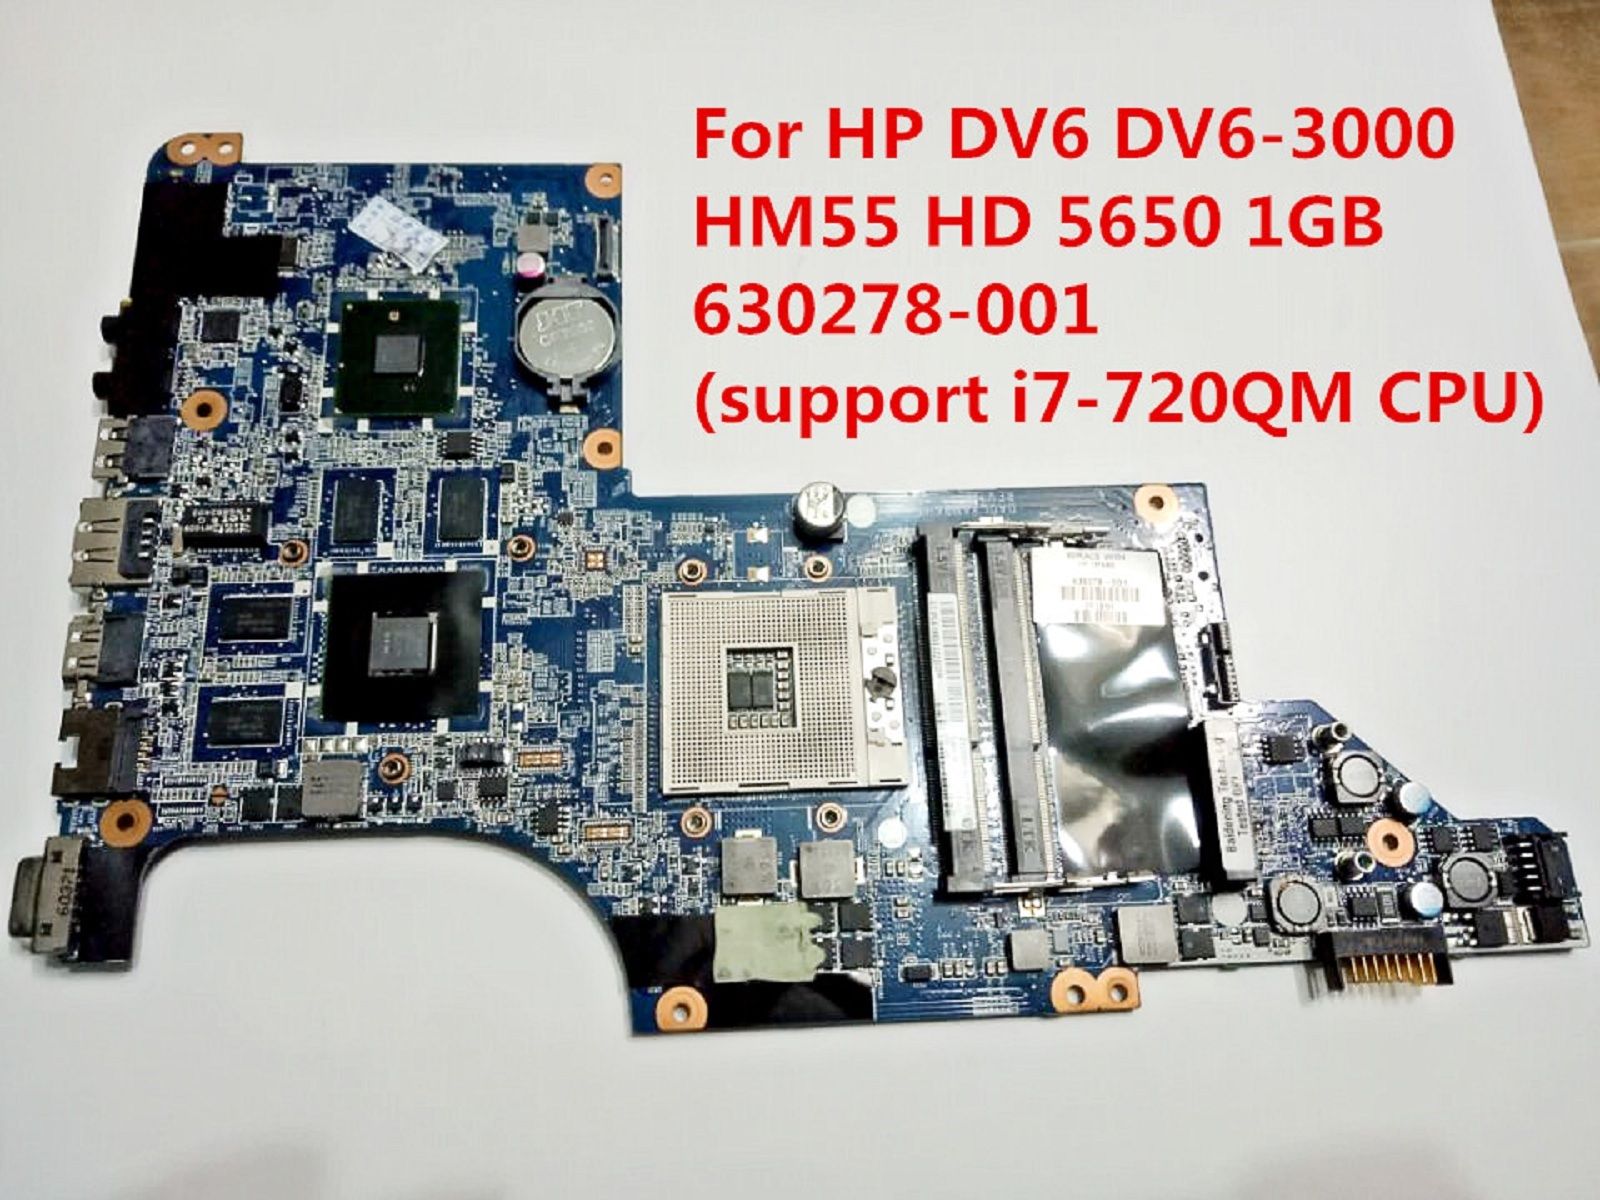 HP DV6 DV6-3000 Intel HM55 ATI 5650/1GB Motherboard 630278-001 DV6